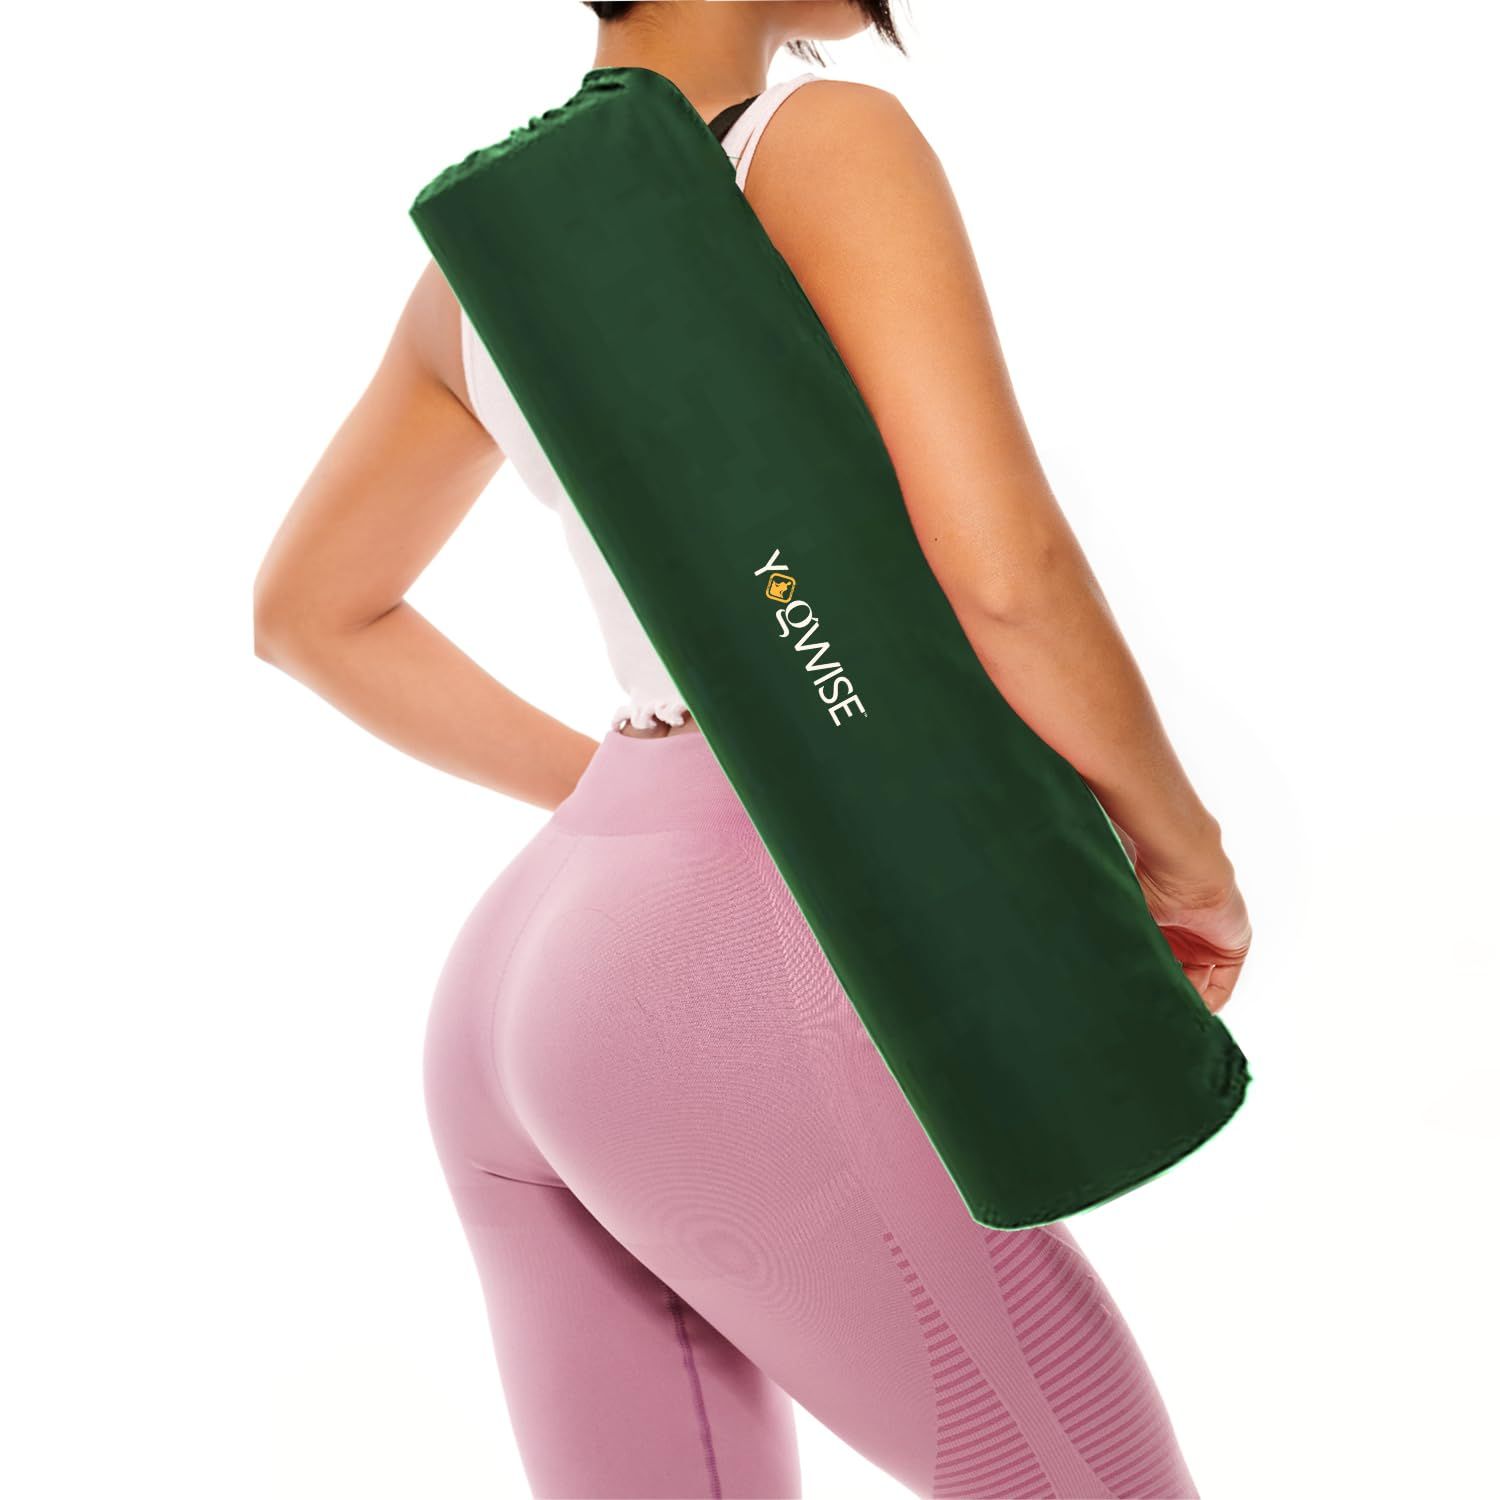 Yogwise Yoga Mat Bag Cover, Waterproof Polyester Material, 4mm to 6mm Yoga Mat Fit - Green